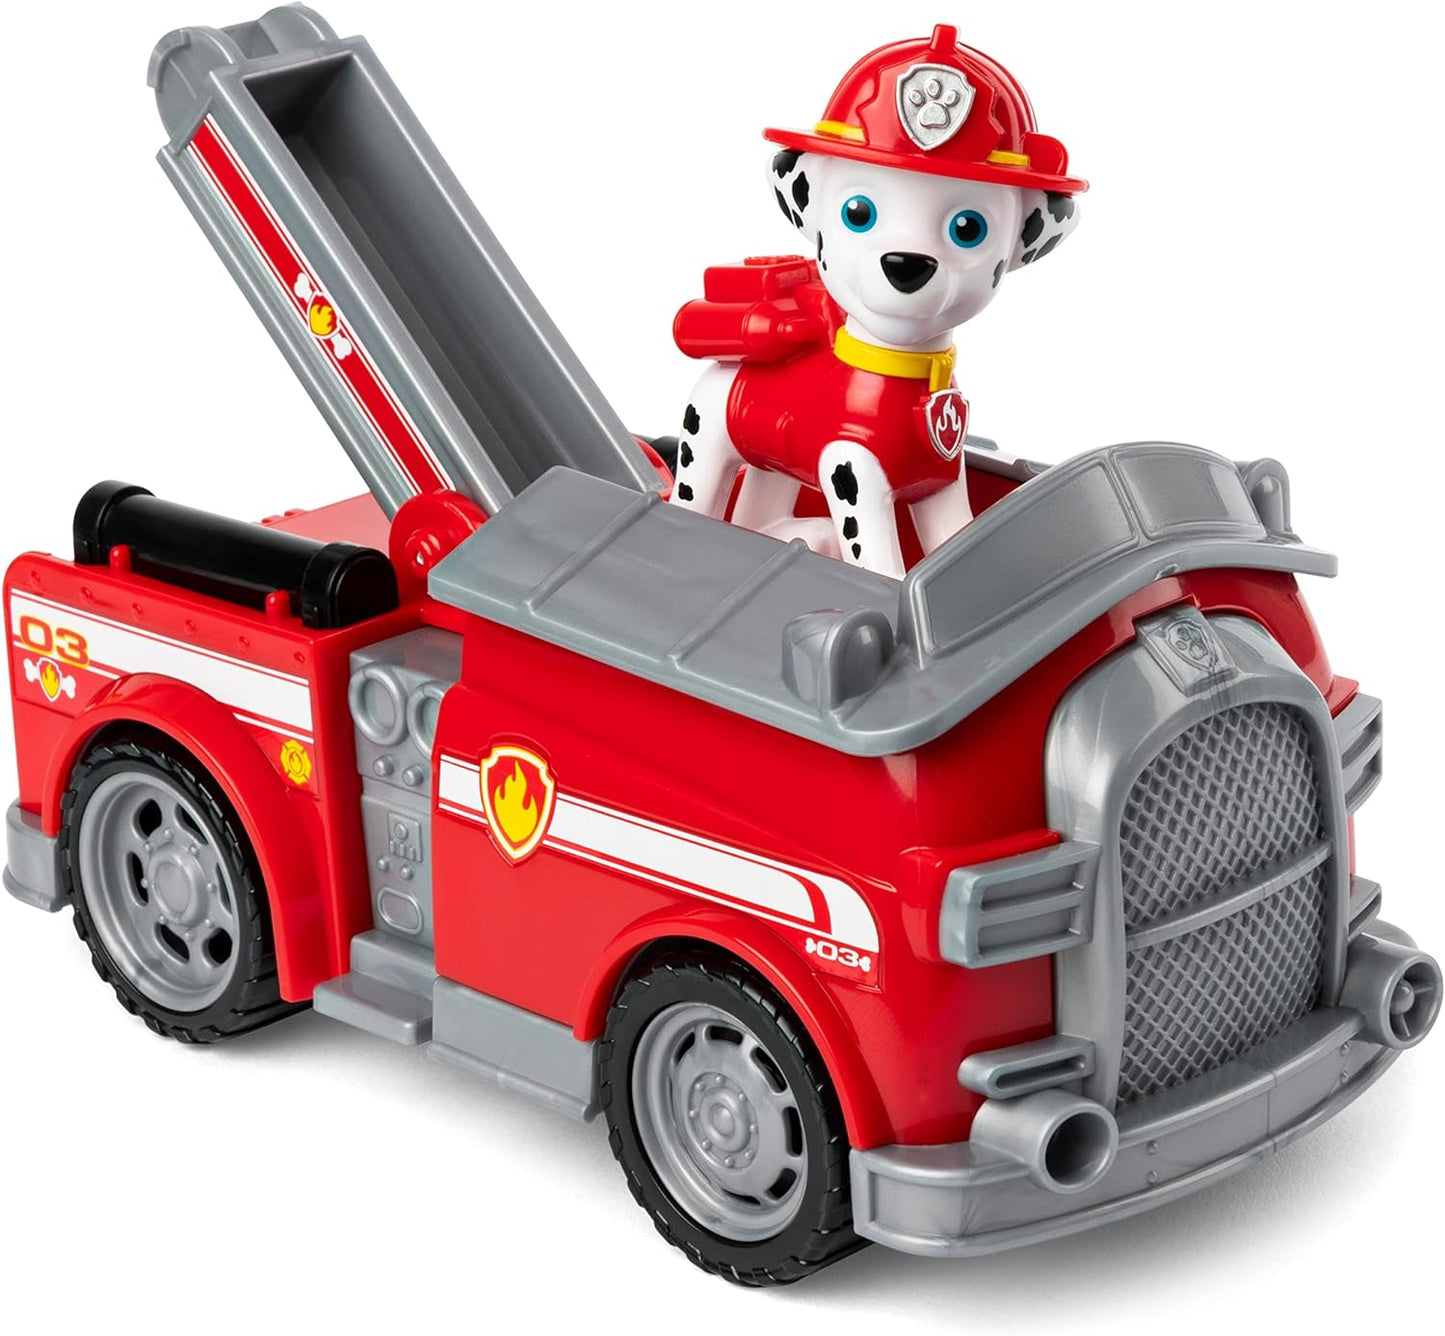 Paw Patrol - Marshall’s Fire Engine Vehicle